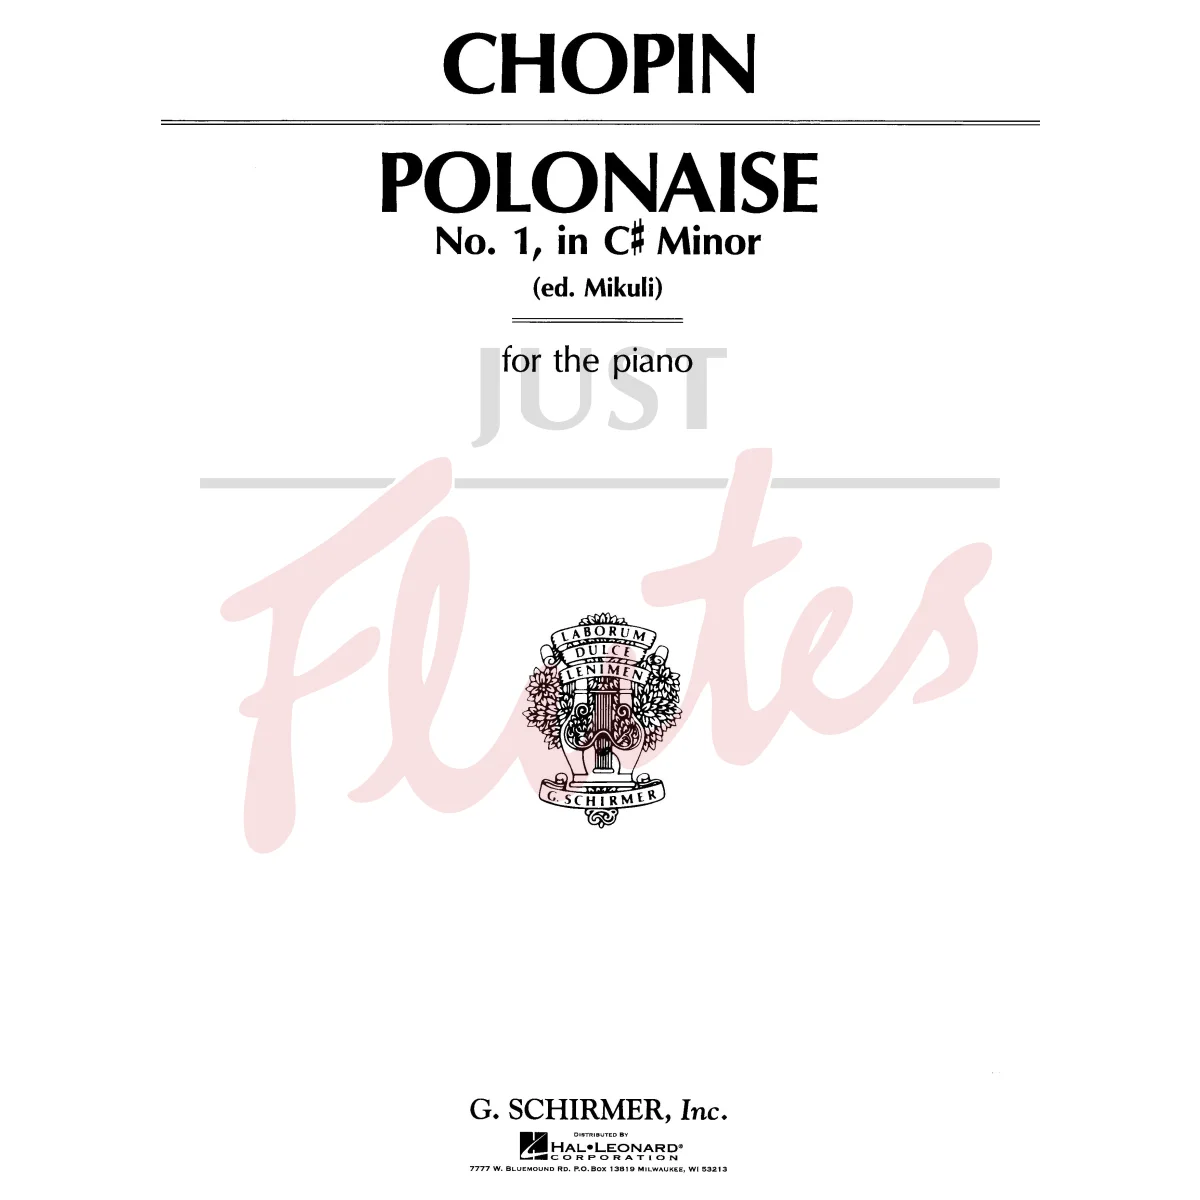 Polonaise No. 1 in C# minor for Piano